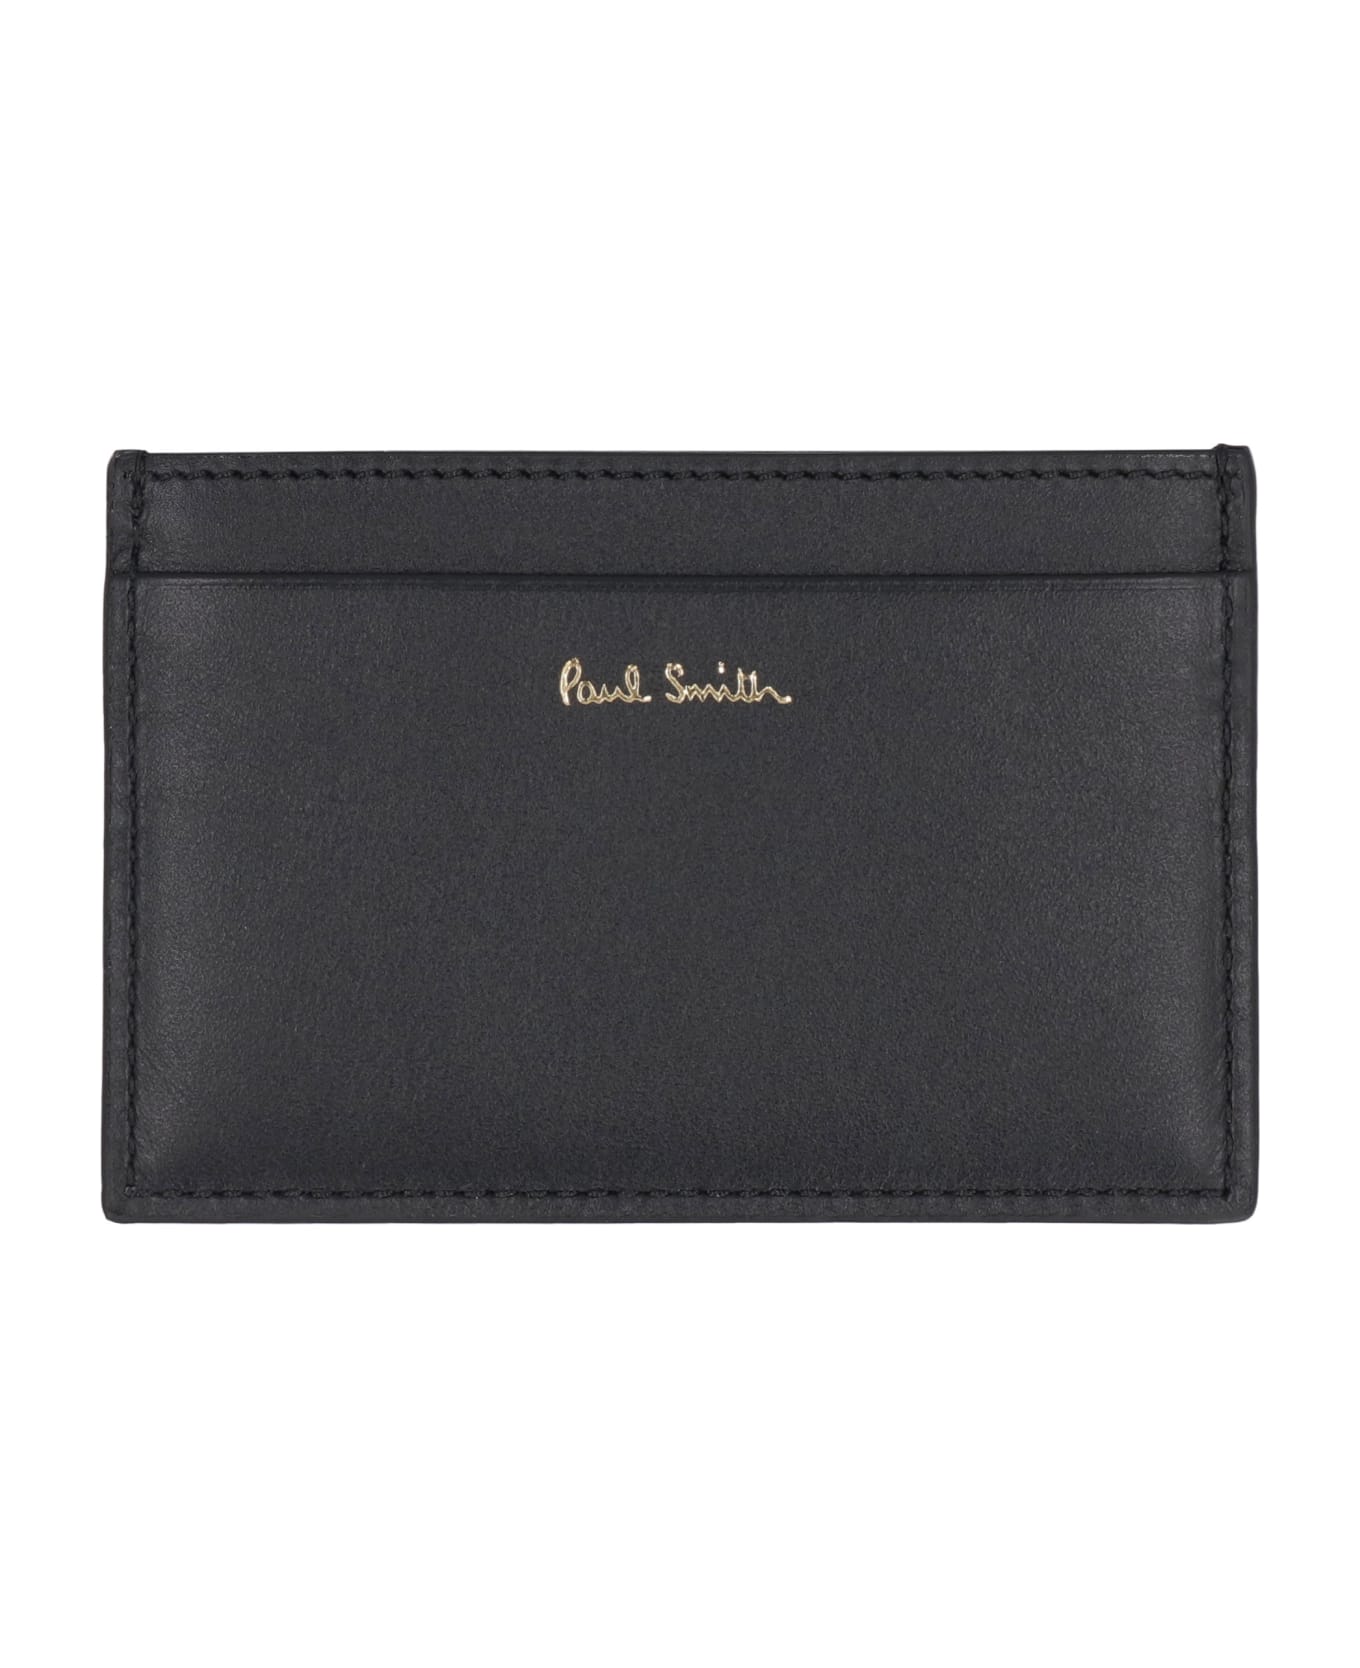 Paul Smith Leather Card Holder - black 財布